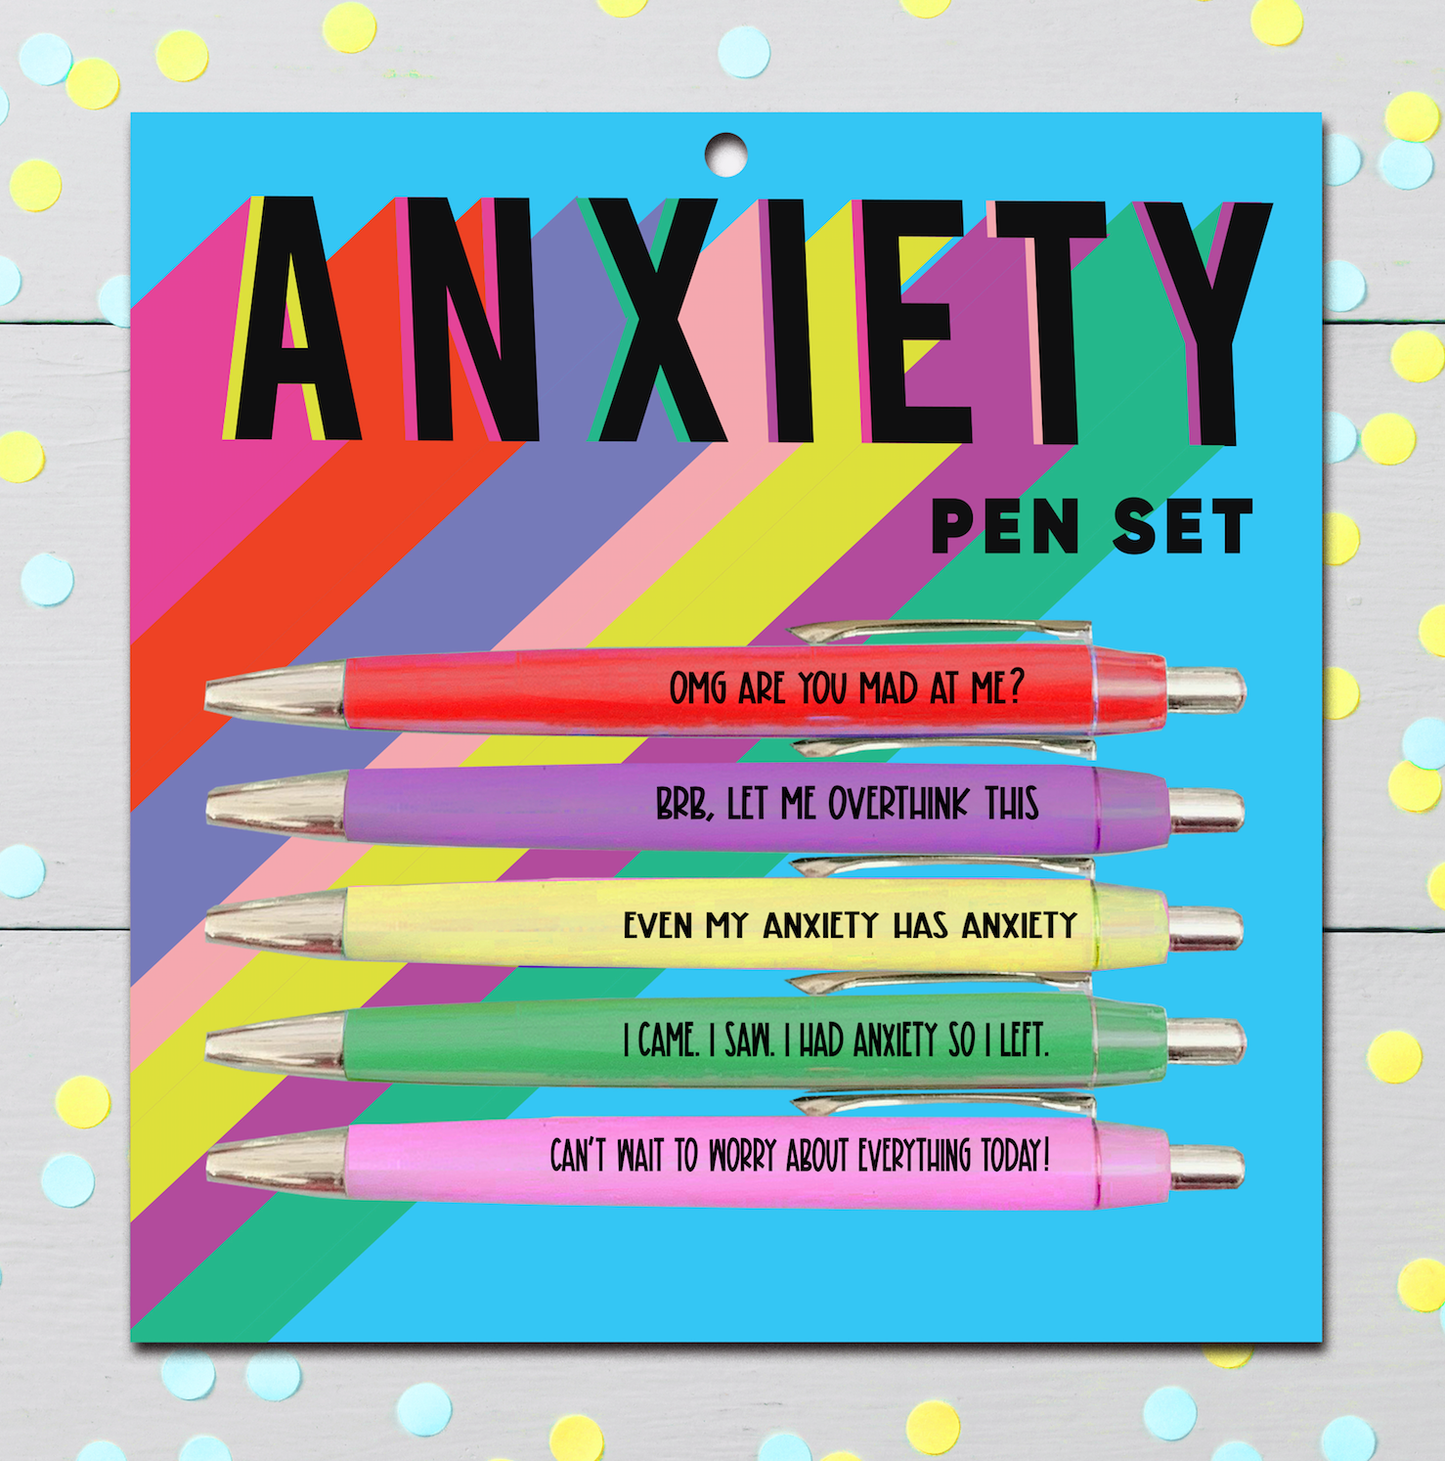 'Anxiety' Pen Set